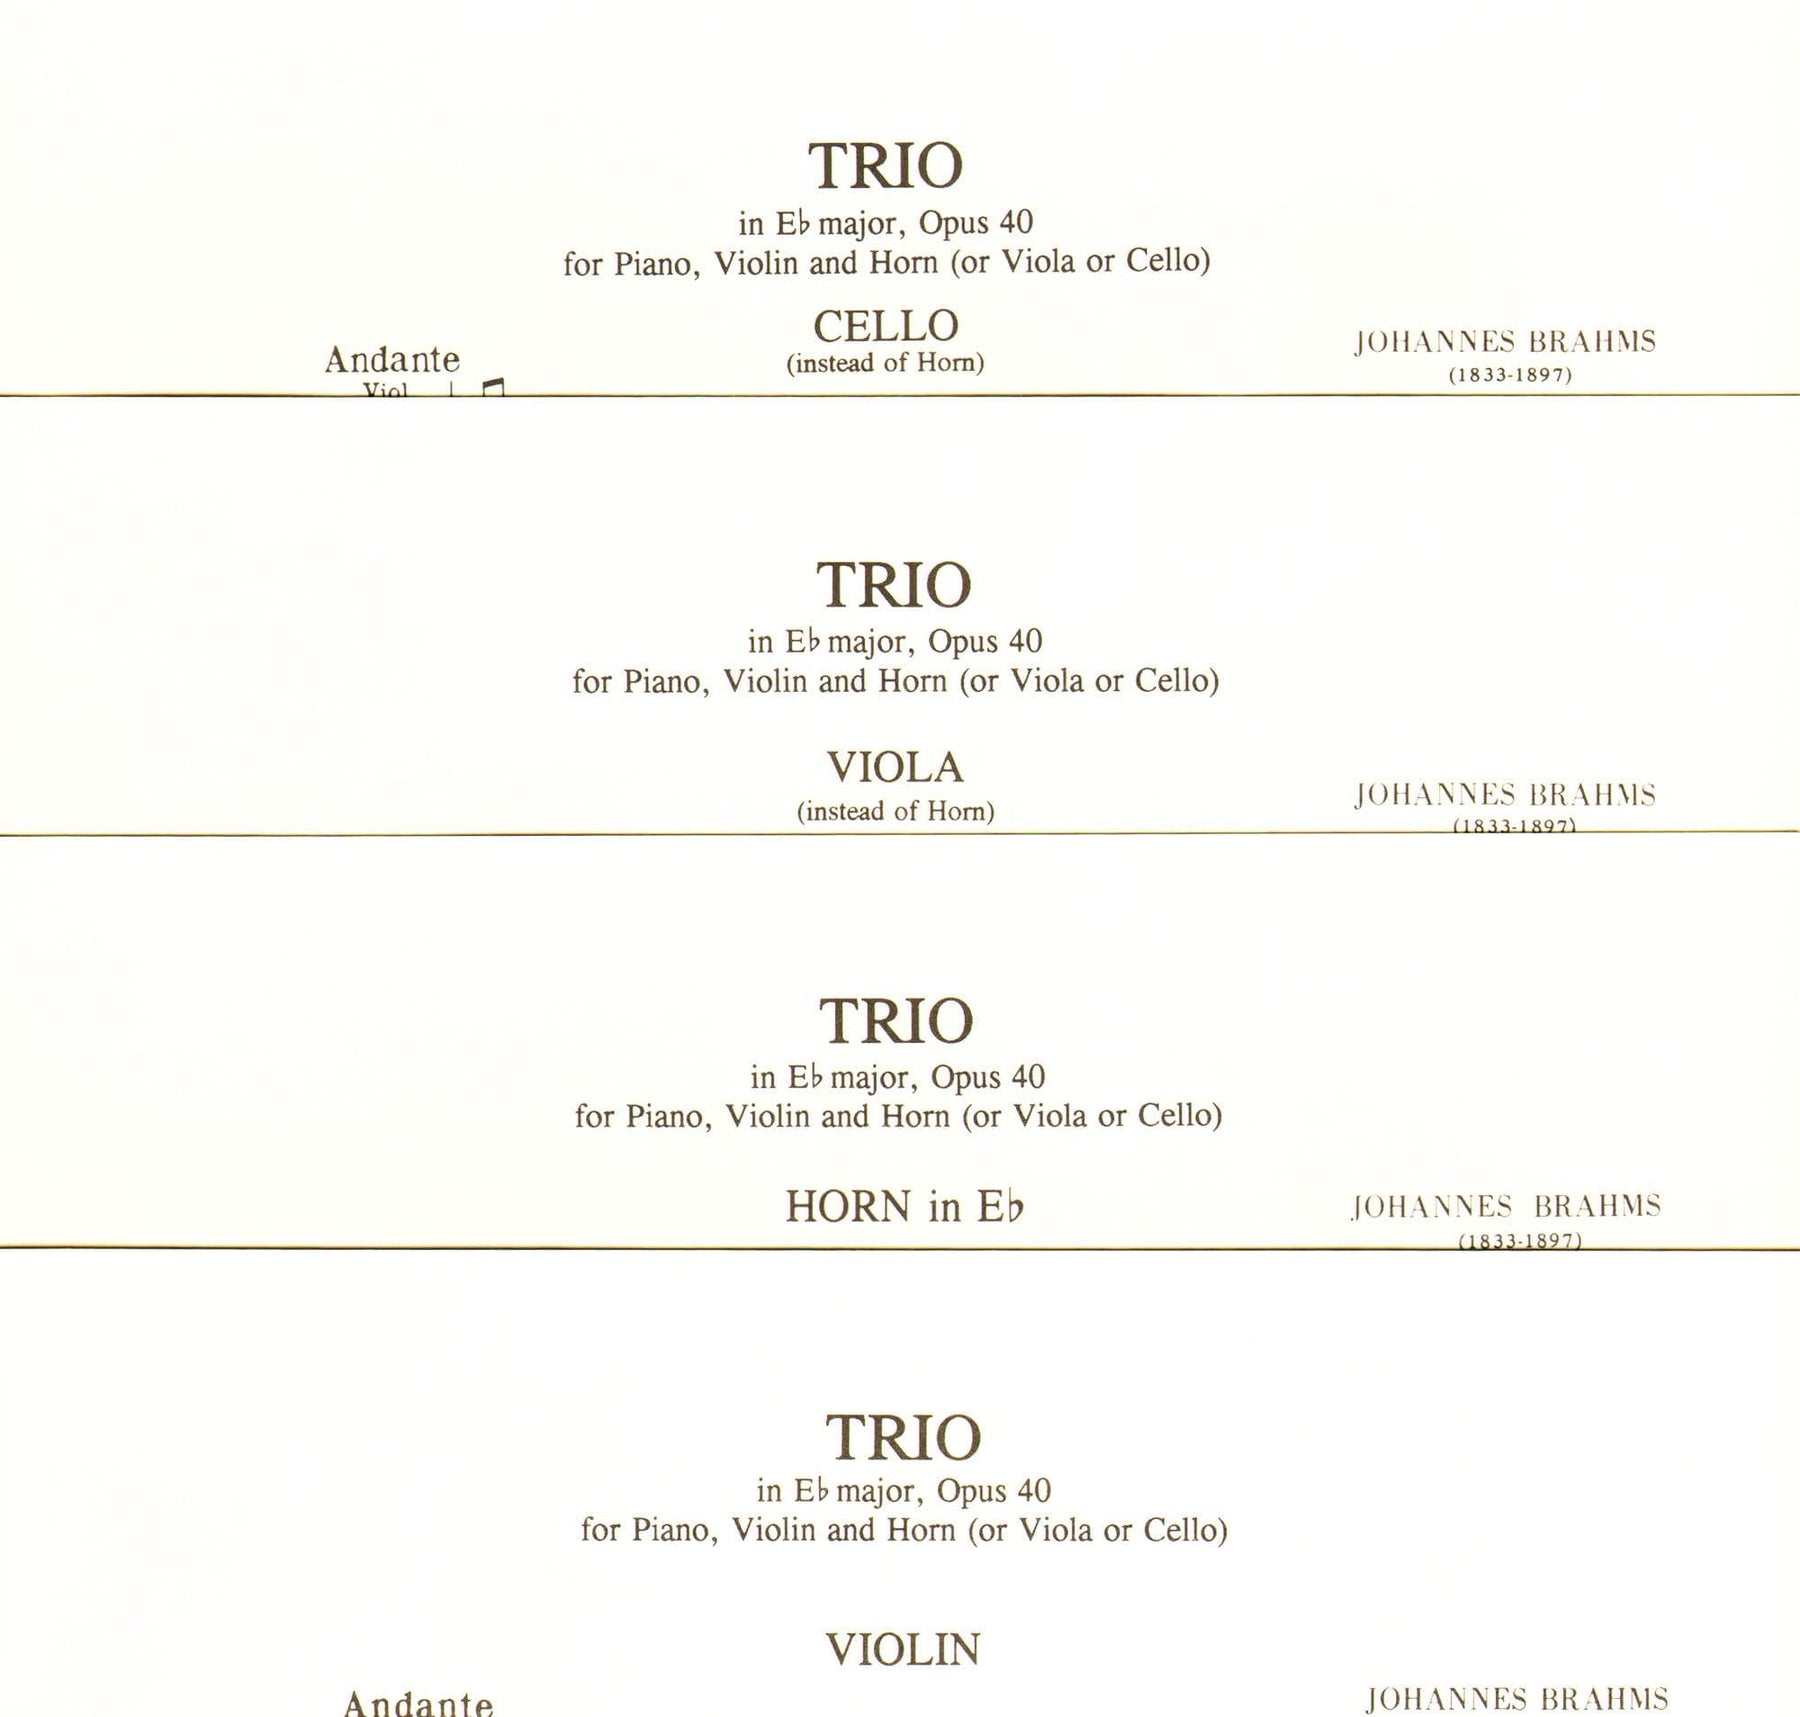 Brahms, Johannes - Trio in E-flat Major Op 40 for Violin, Viola/Cello and Piano - International Edition